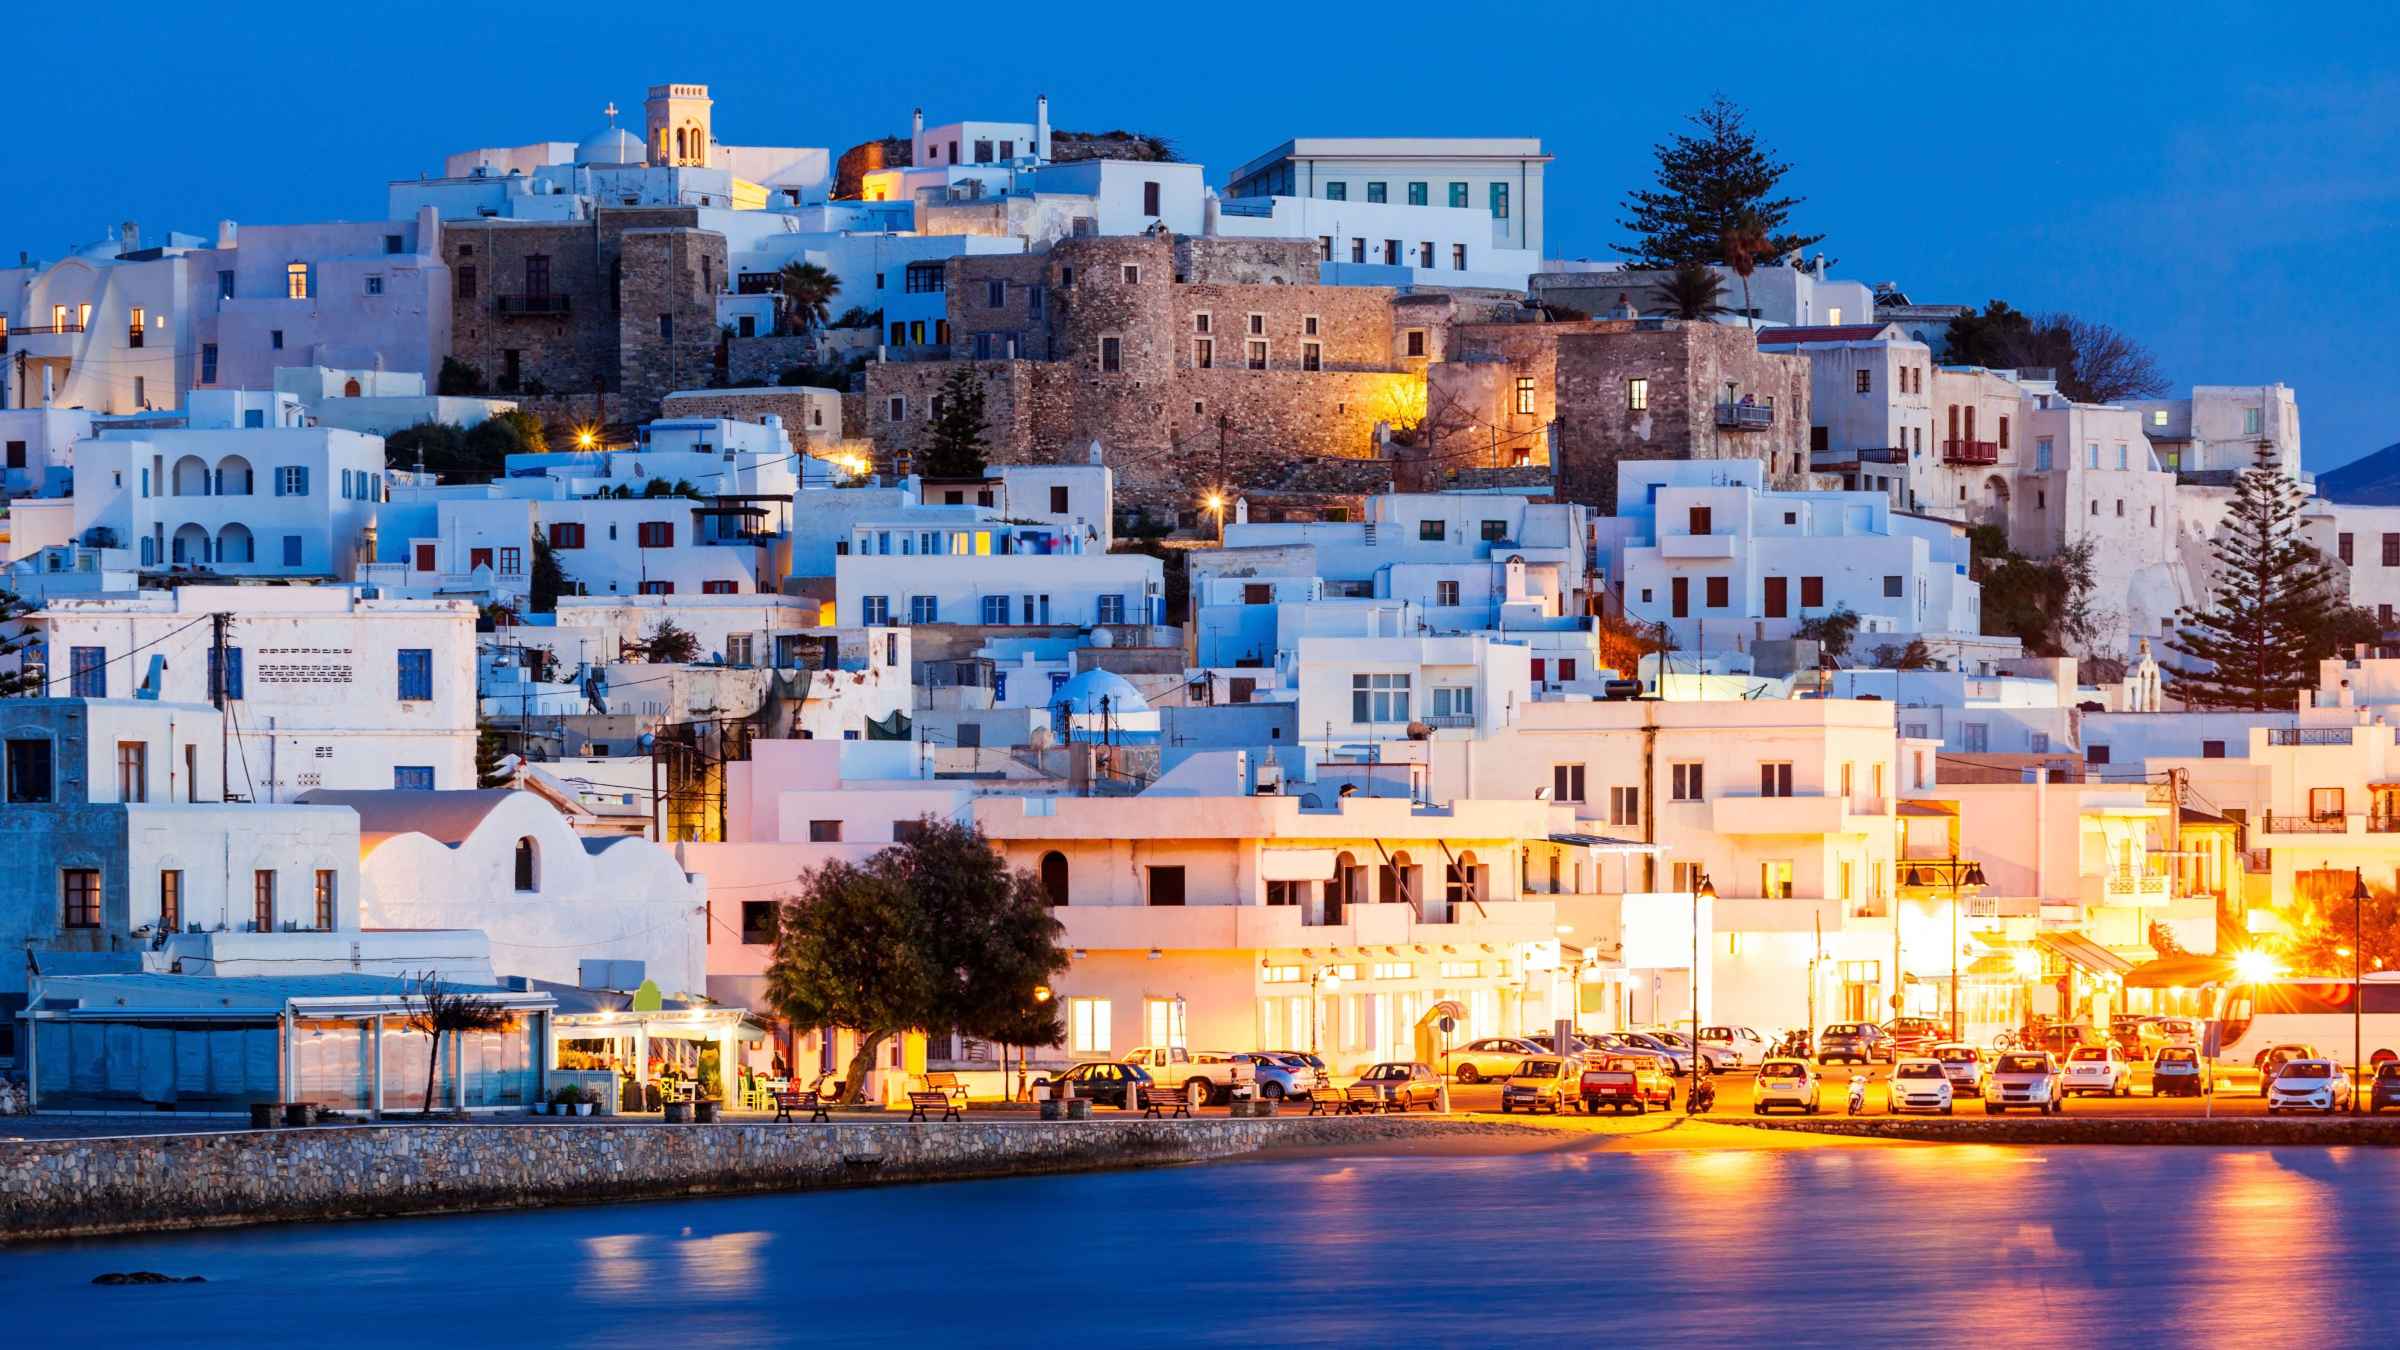 naxos as a tourist destination